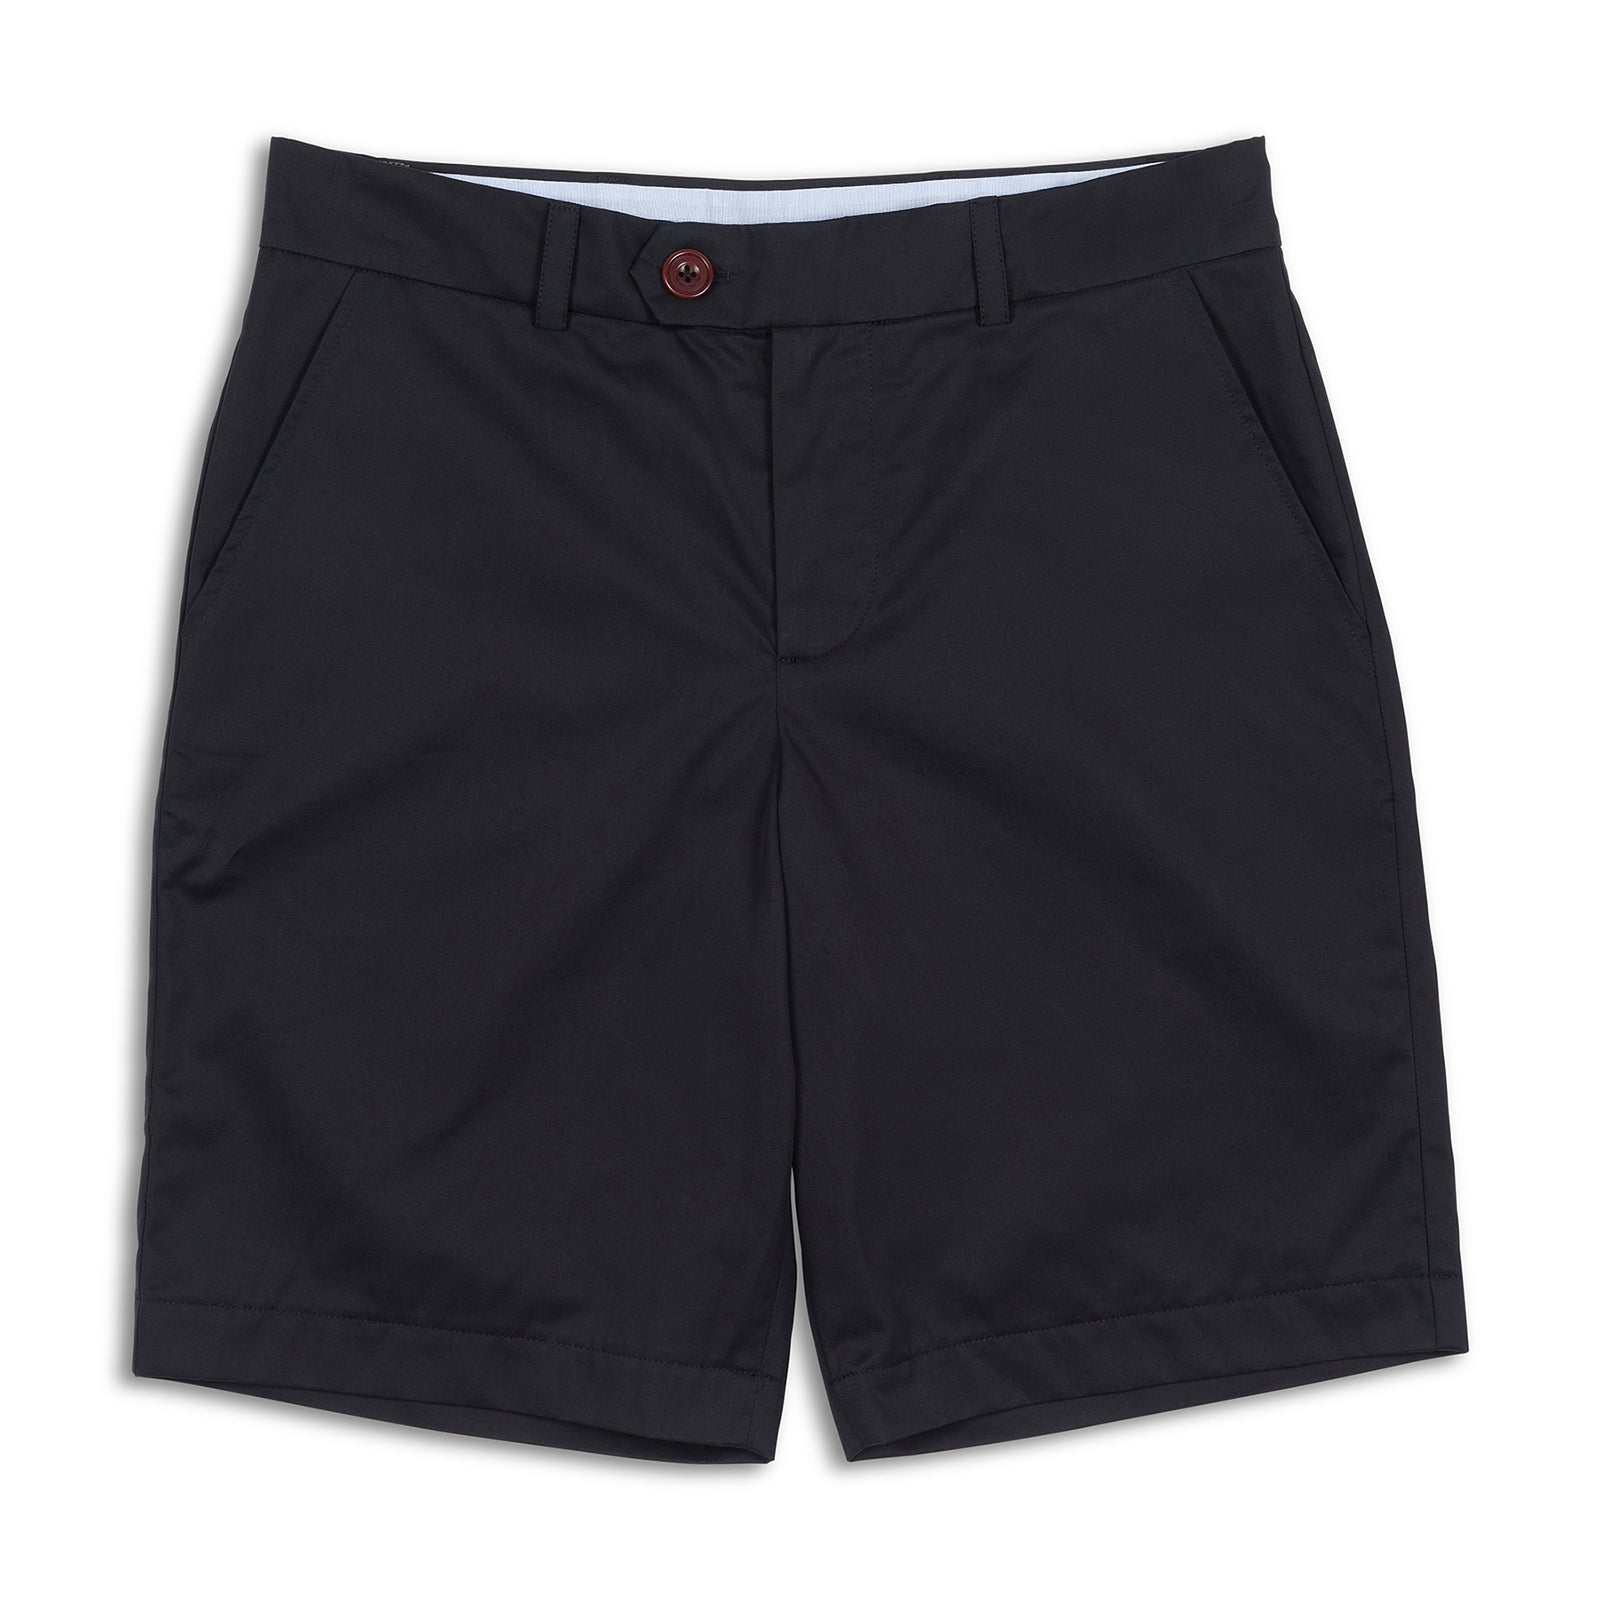 The Merchant Fox Cotton Shorts in Black